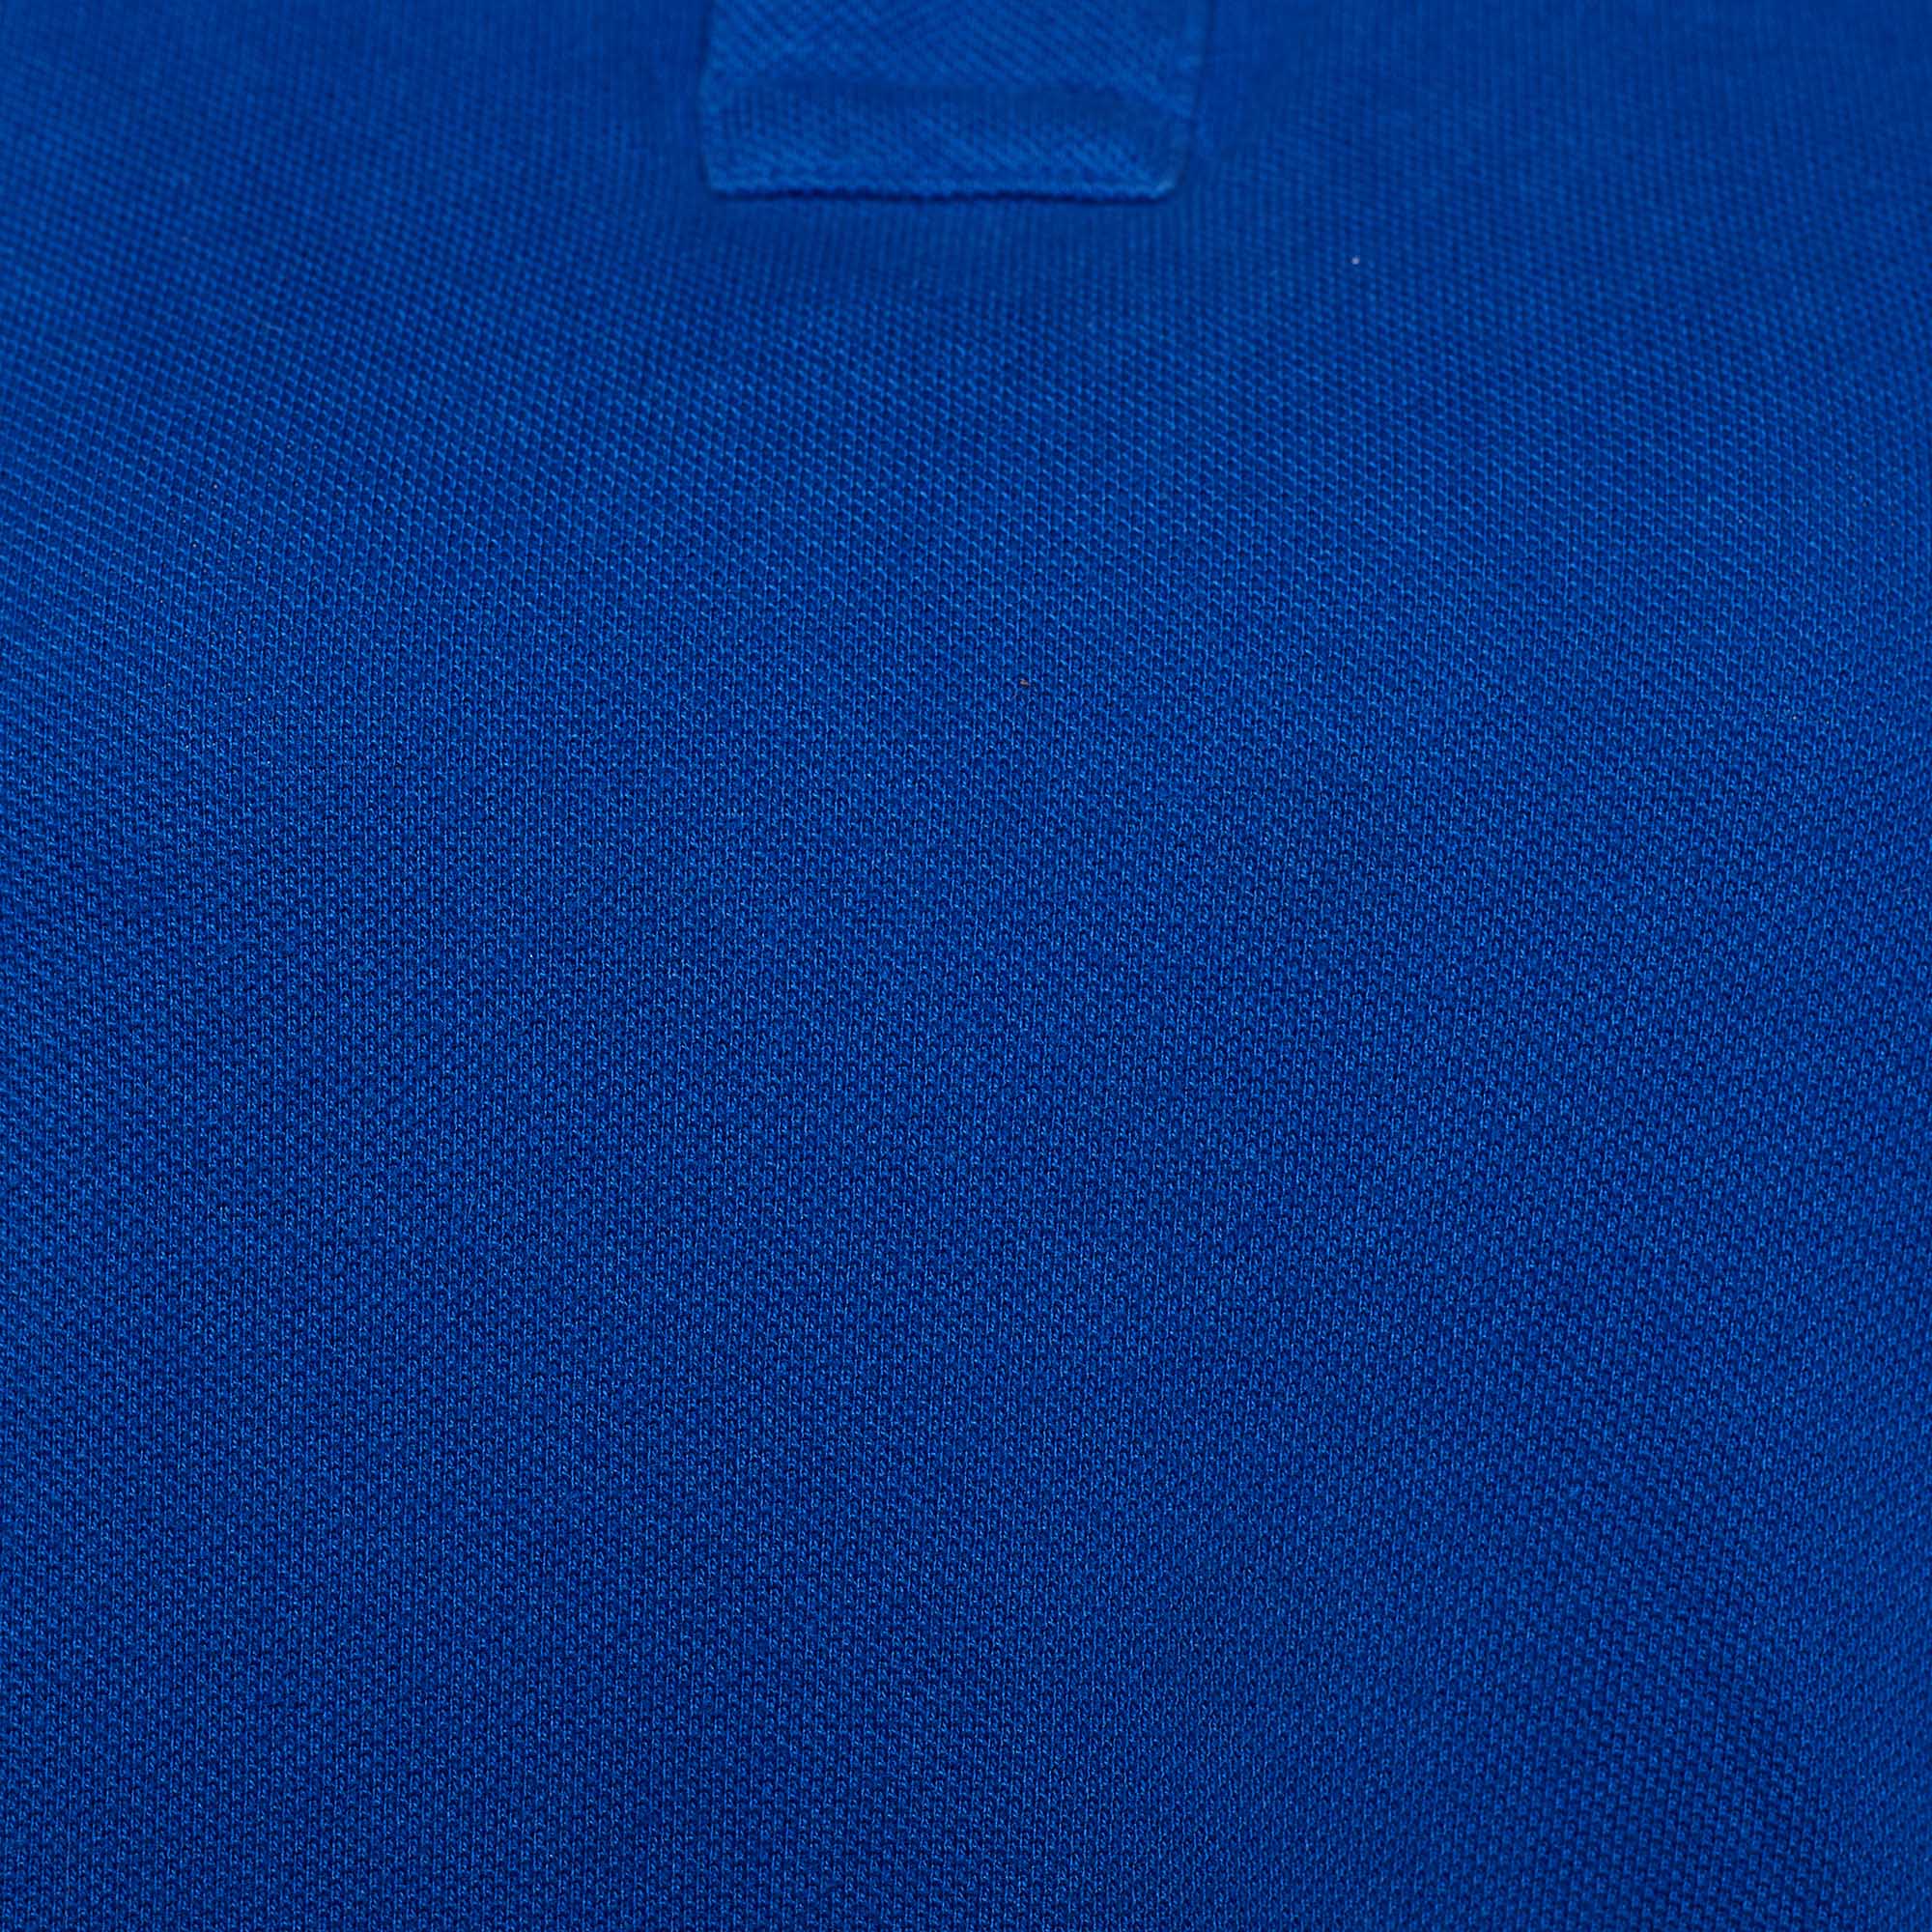 Polo Ralph Lauren Blue Logo Embroidered Cotton Pique Polo T-Shirt M